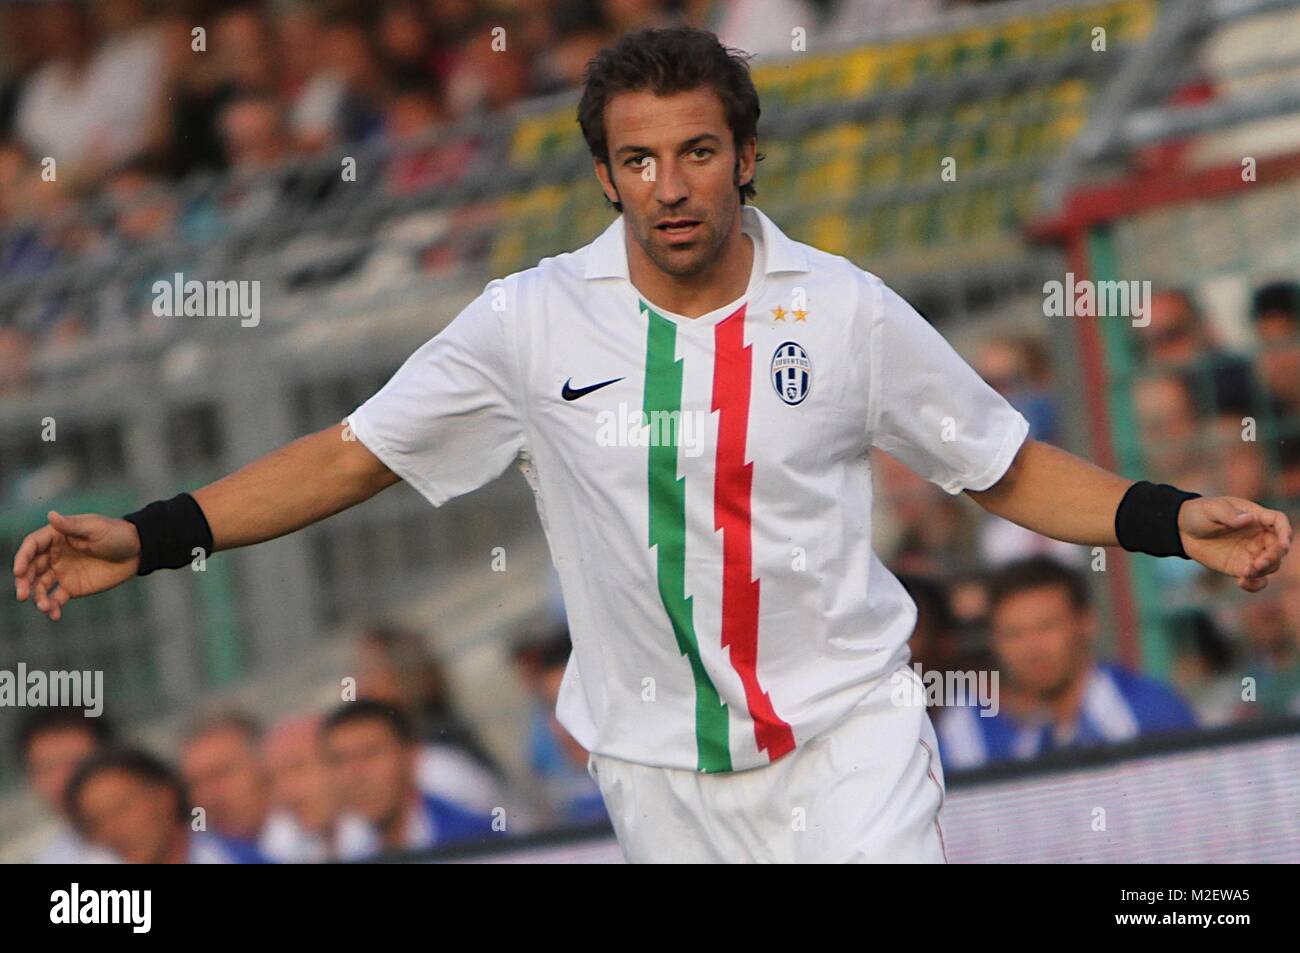 HSV - Juventus Turin, Alessandro del Piero Stockfotografie - Alamy